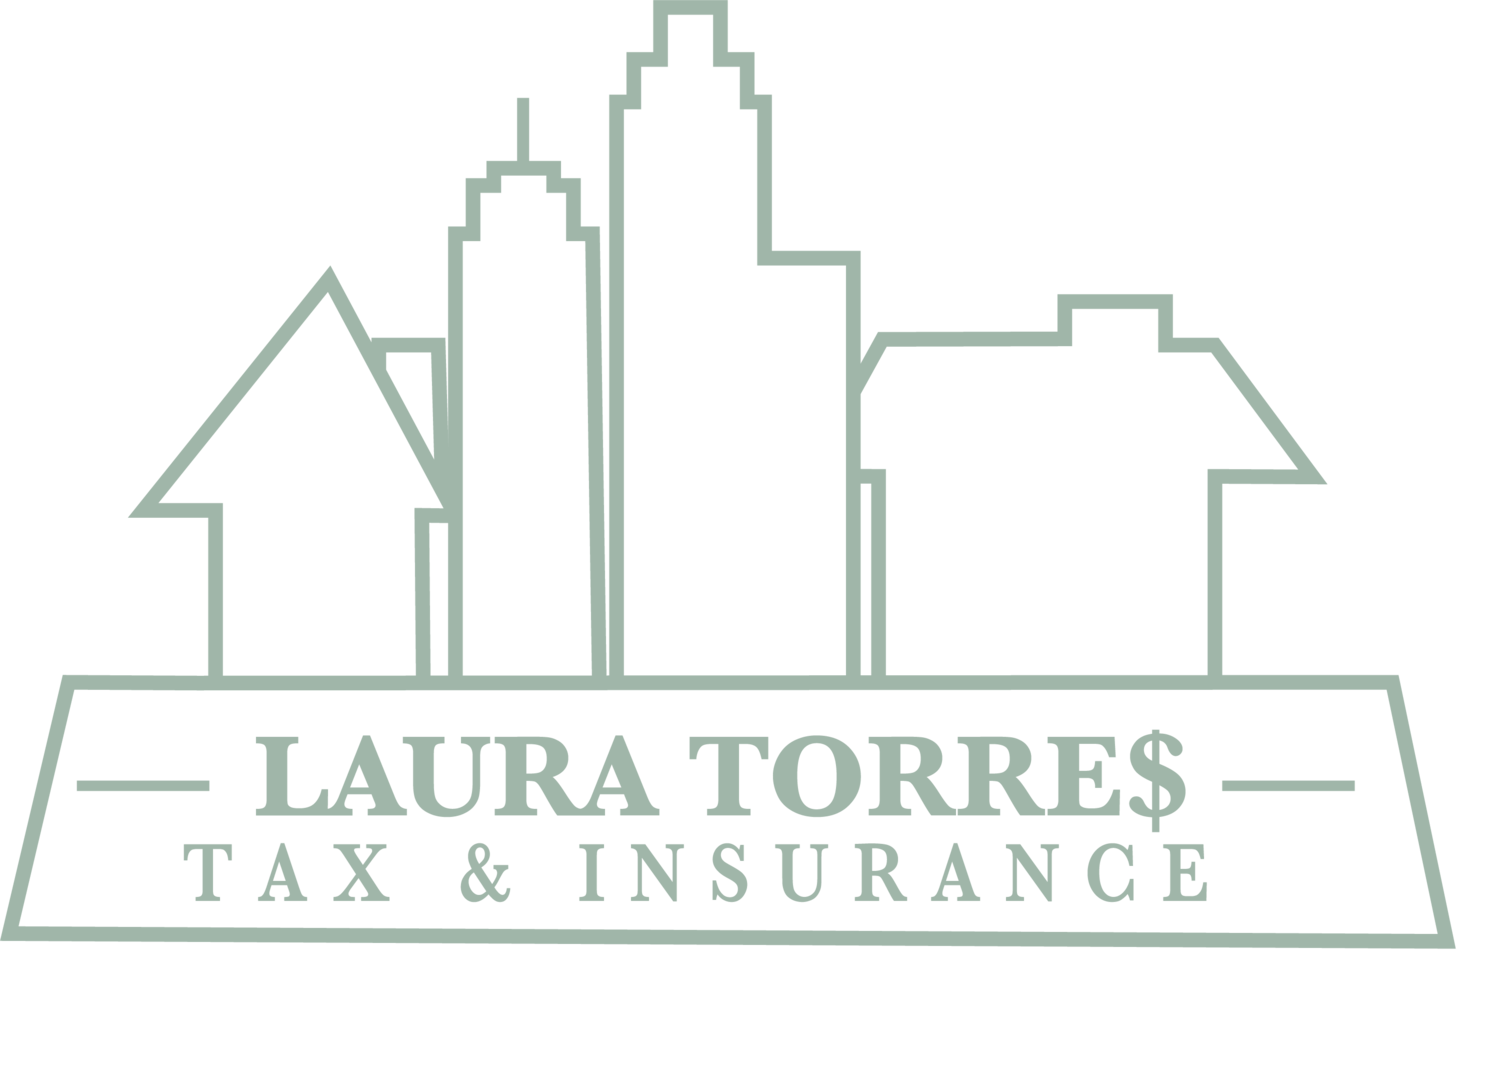 Laura Torres Services